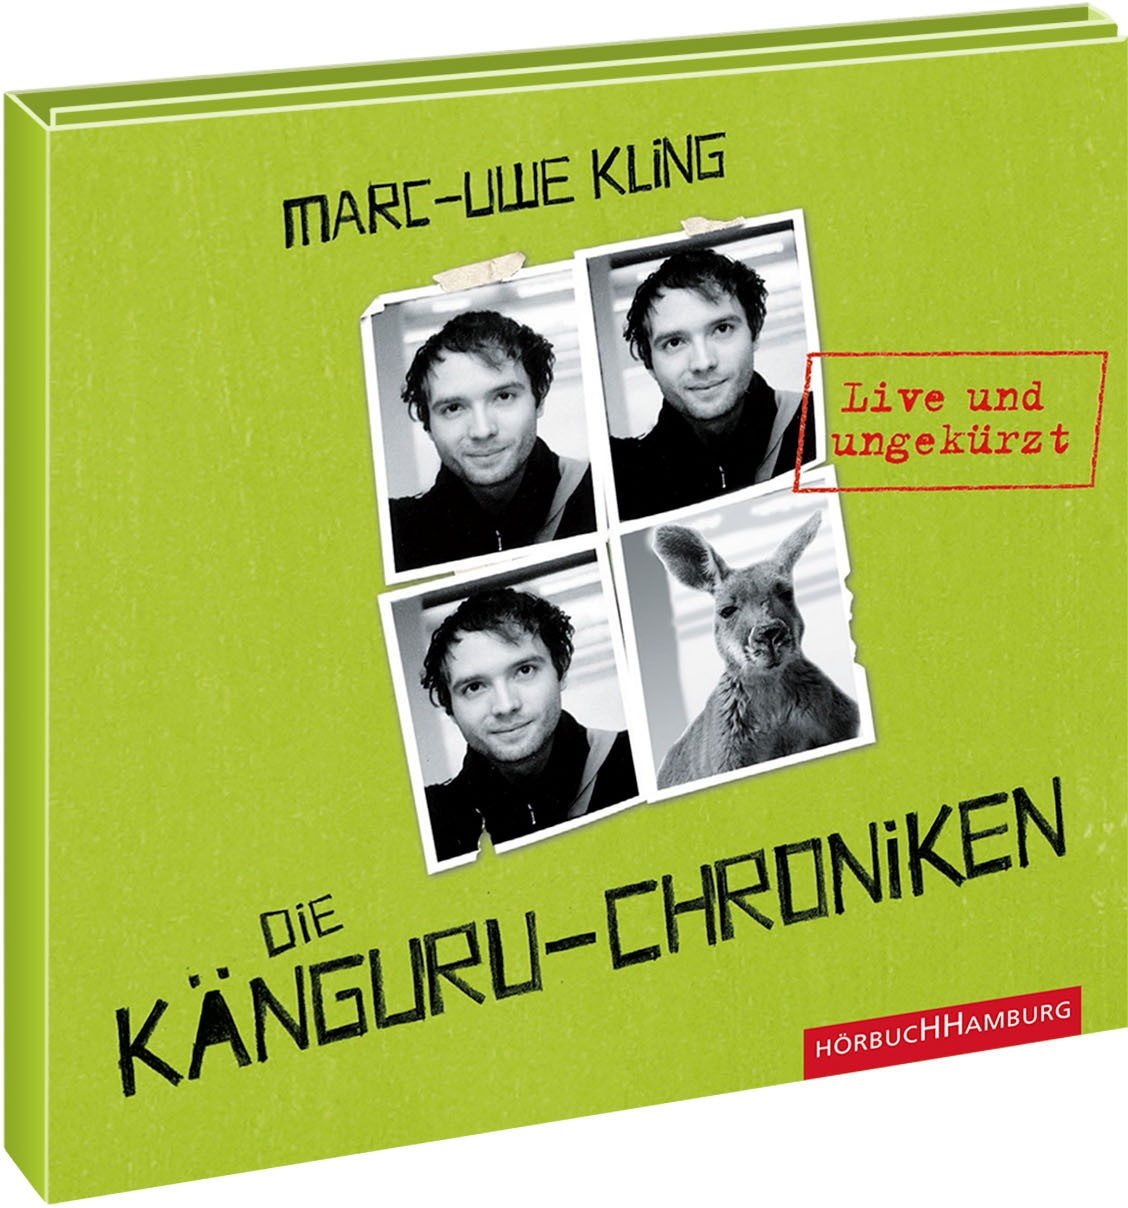 Känguru Chroniken - 1 - Die Känguru-Chroniken - Marc-Uwe Kling (Hörbuch)